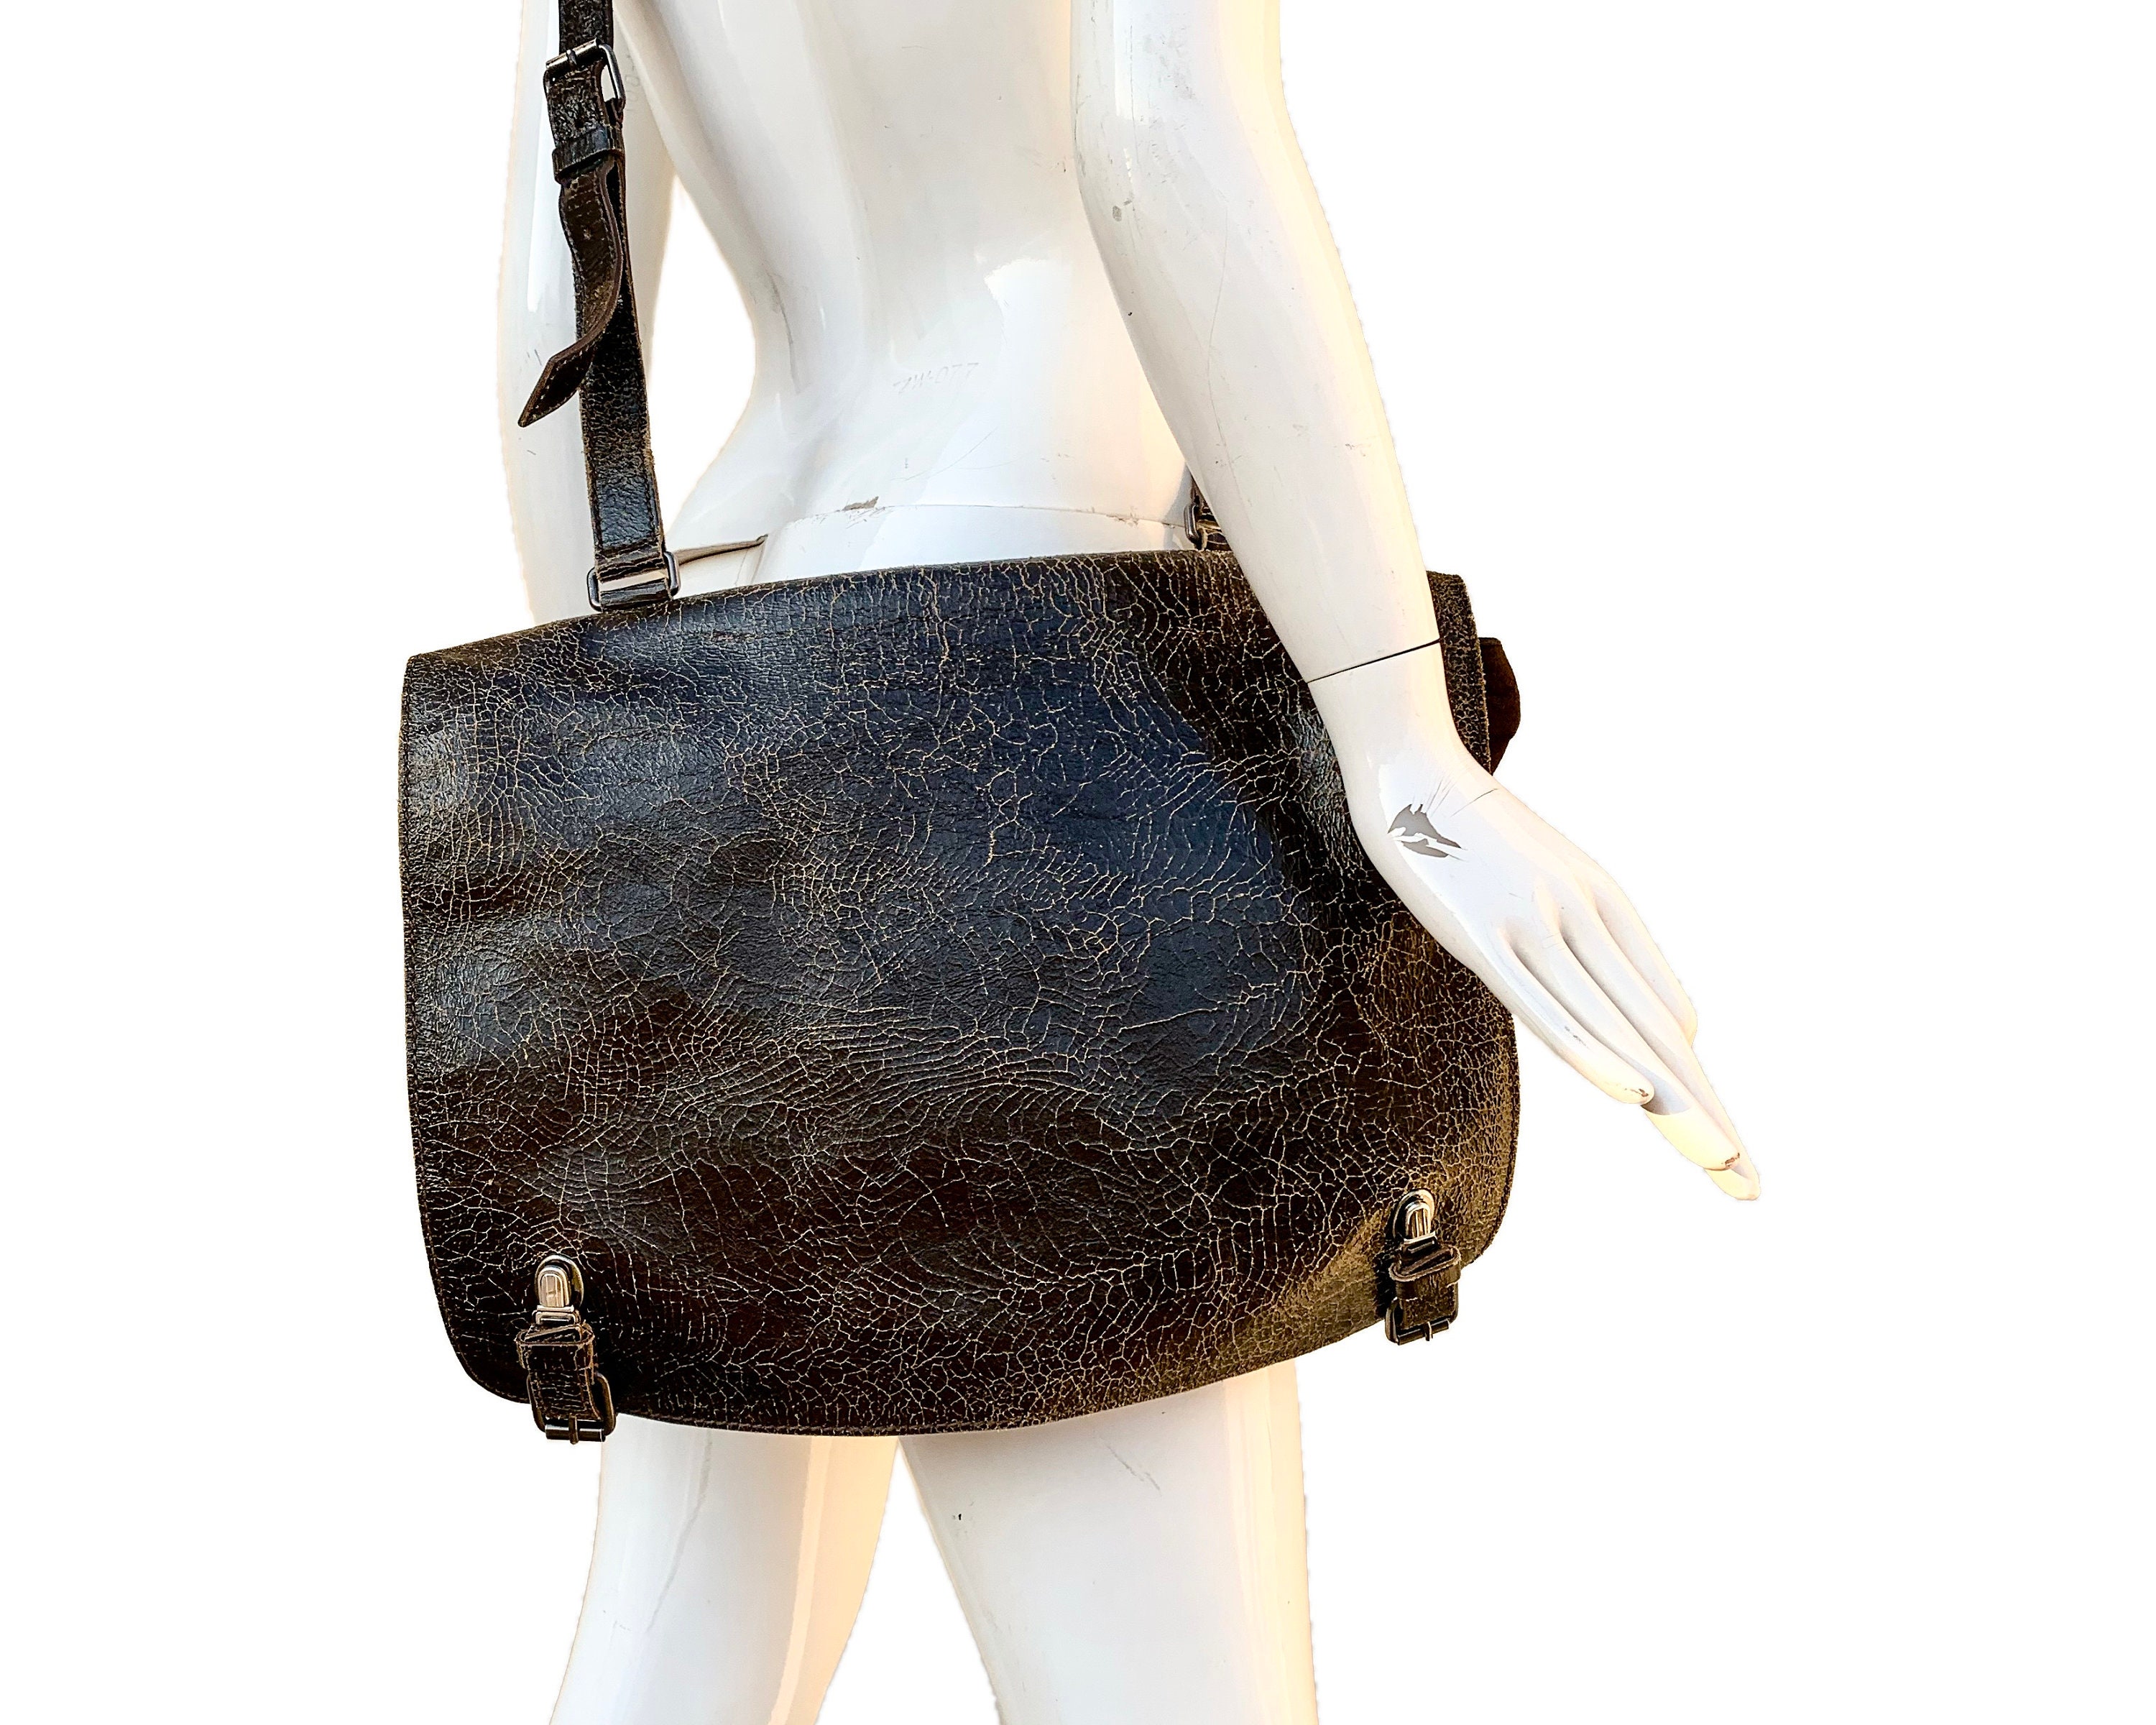 Miu Miu Brown Leather Small Handbag — UFO No More